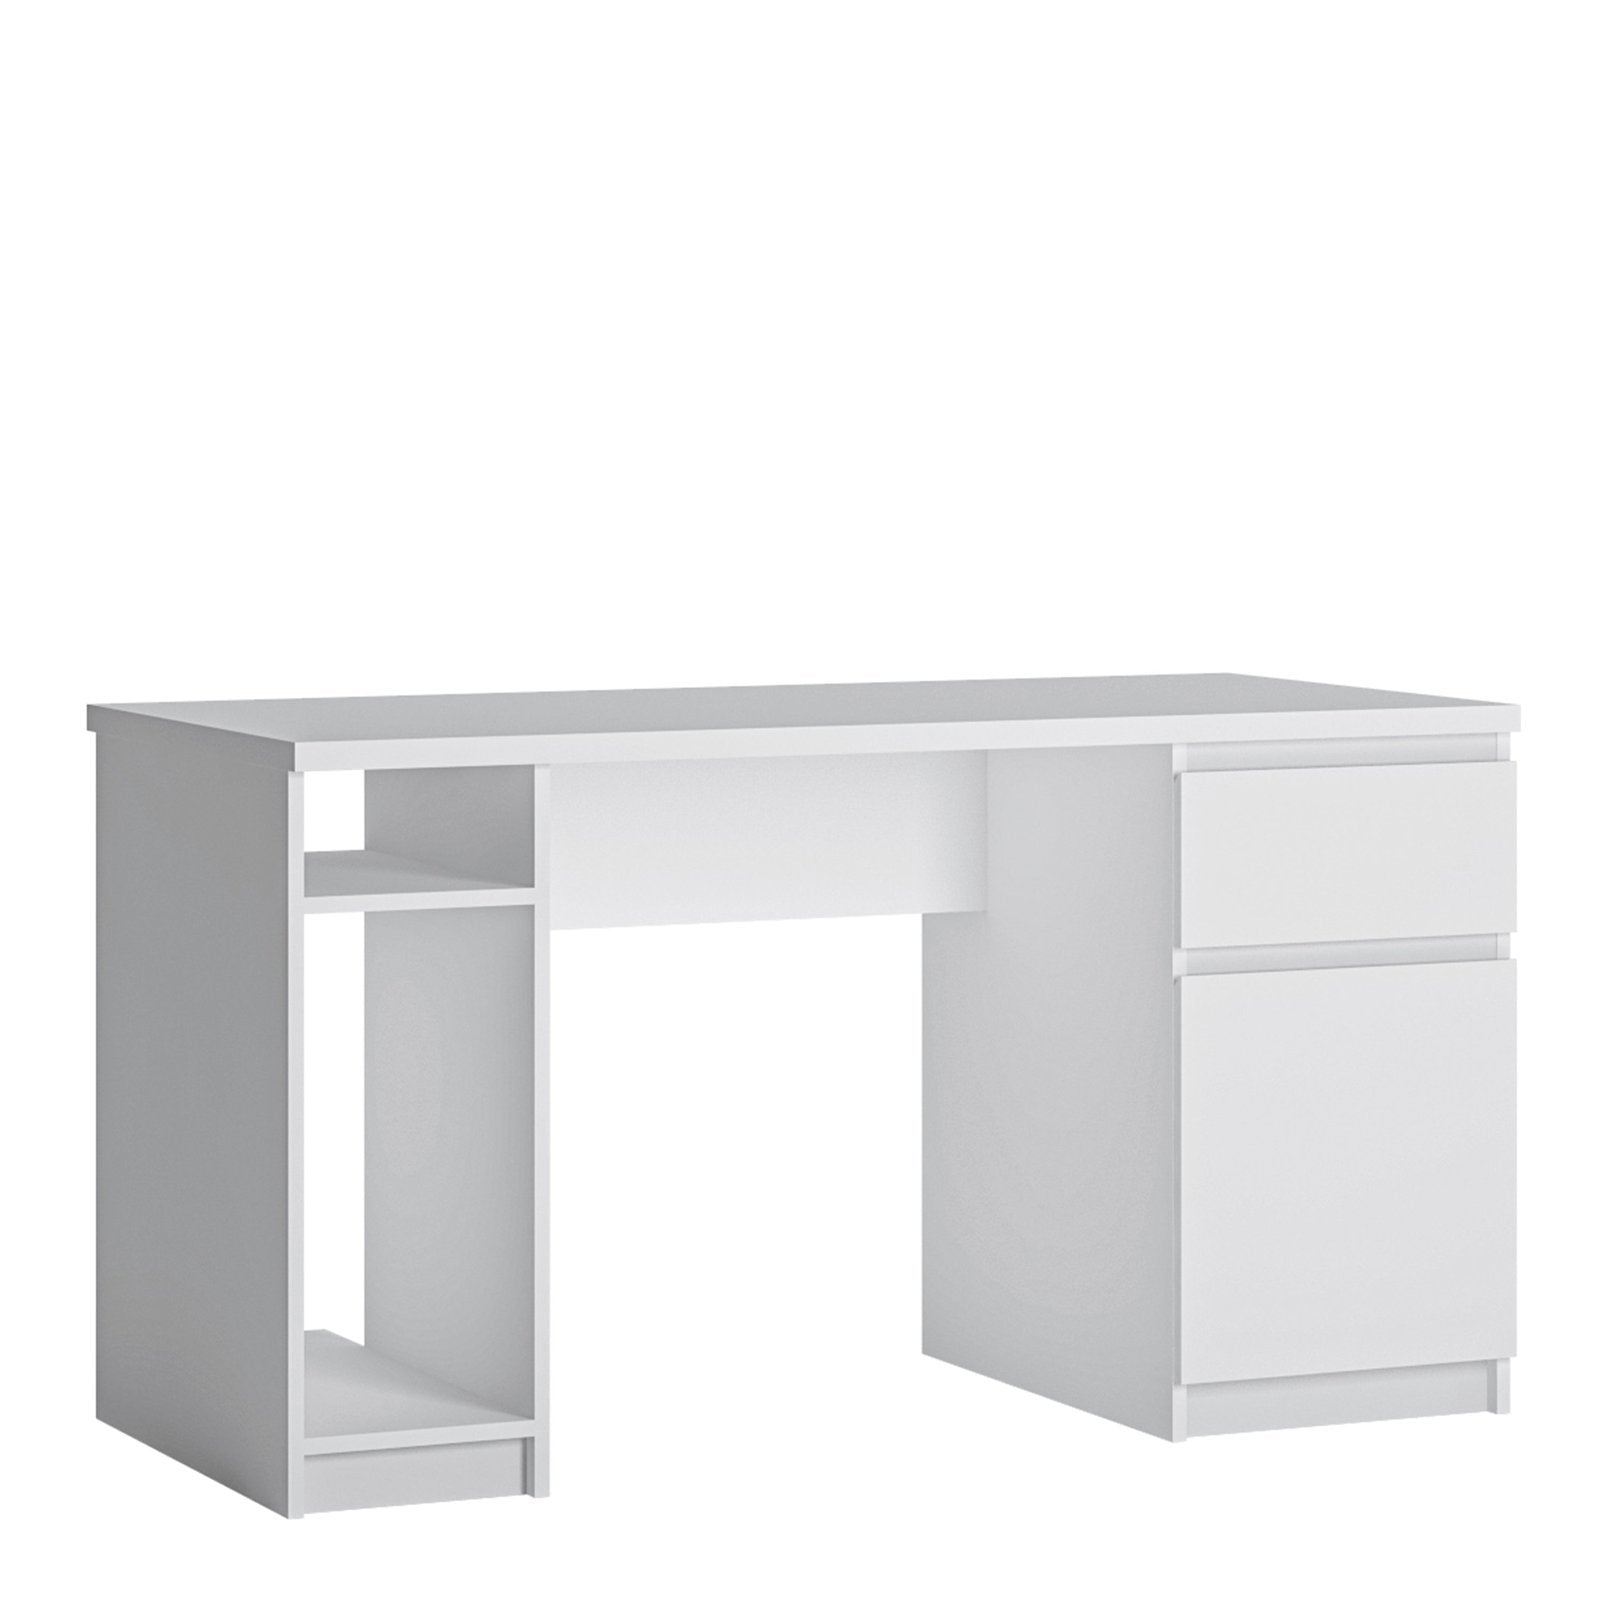 Fribo 1 Door 1 Drawer Twin Pedestal Desk